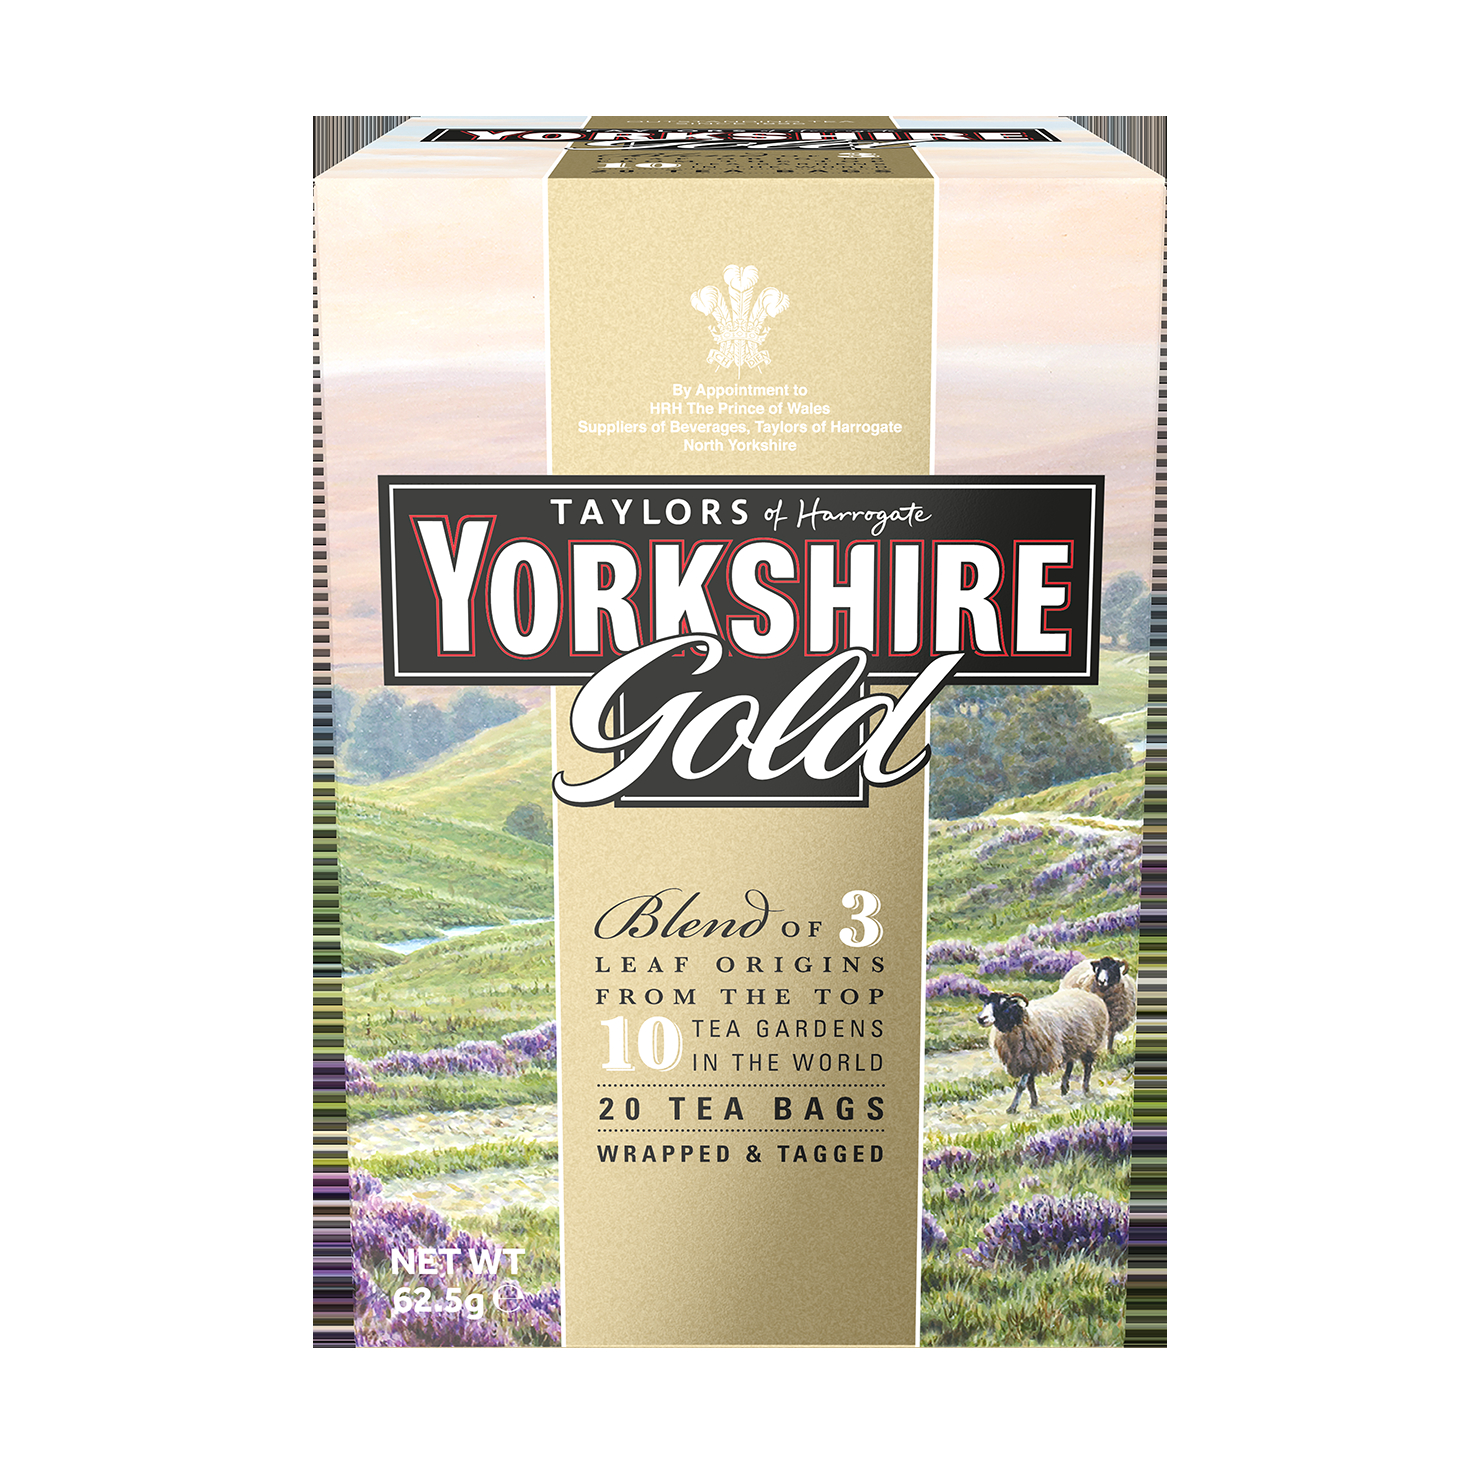 Taylors čaj Yorkshire Gold